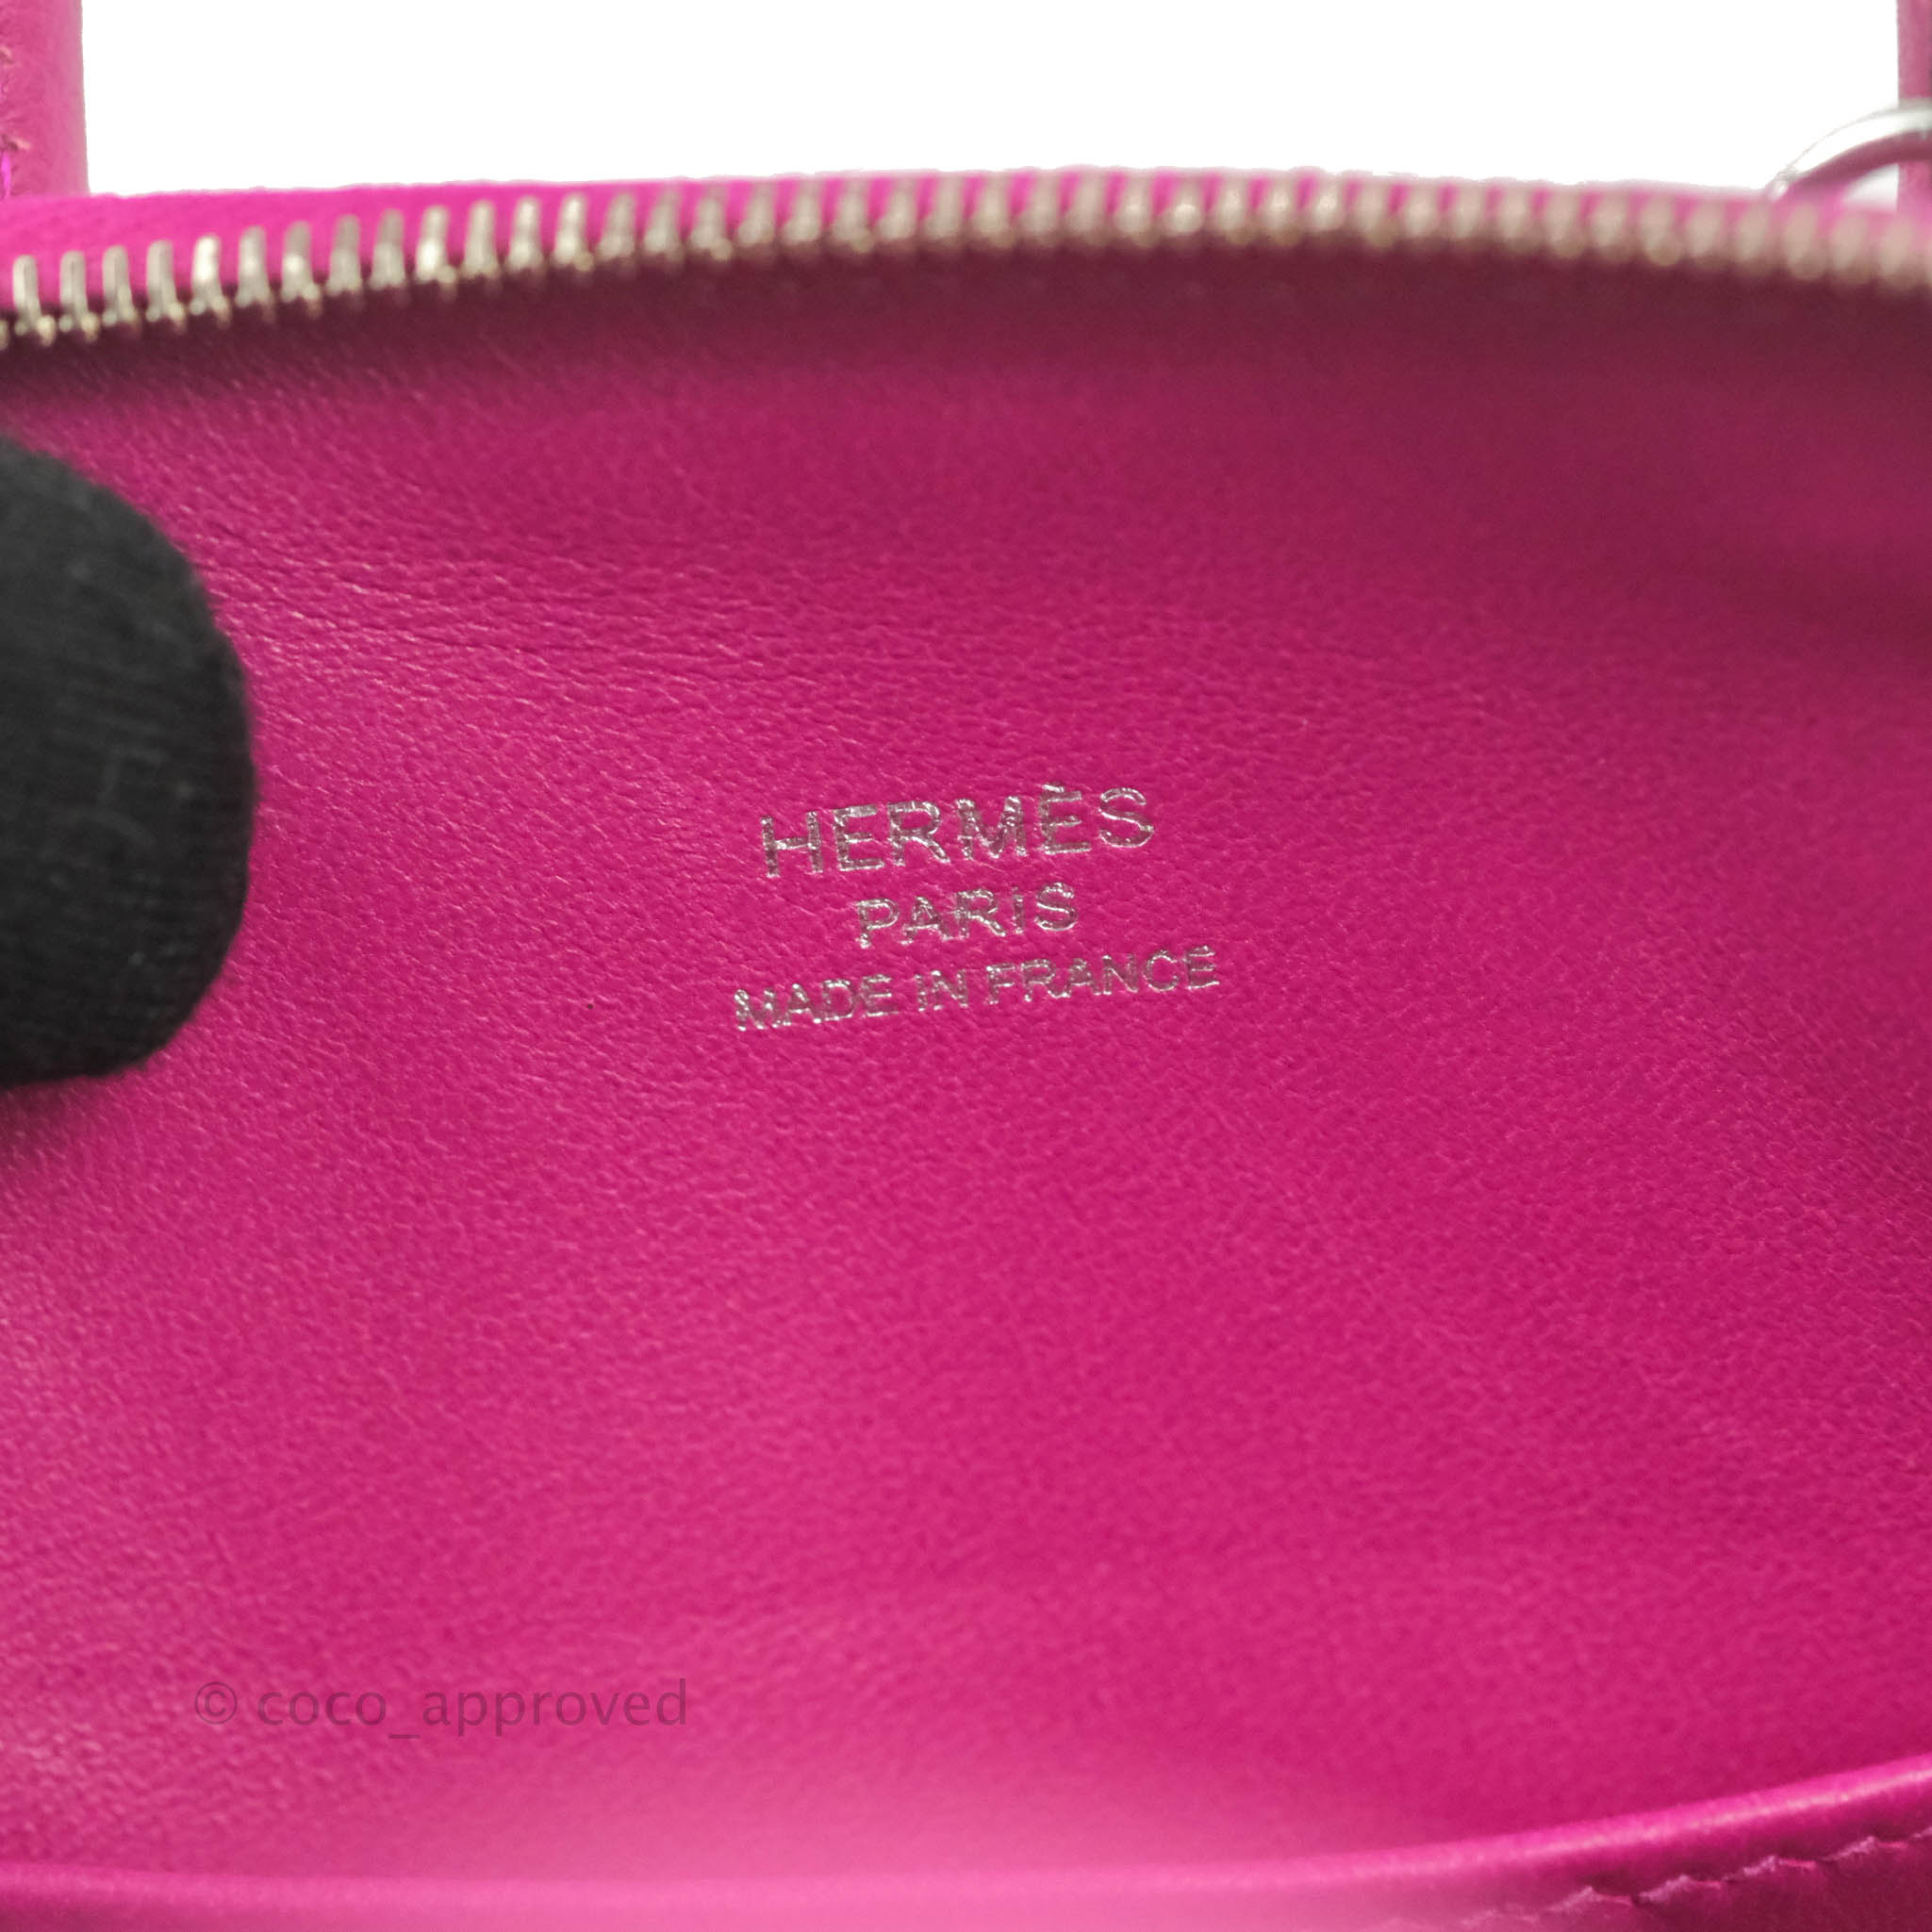 Hermès Etoupe Evercolor Leather Mini Bolide Bag with Palladium, Lot #14020